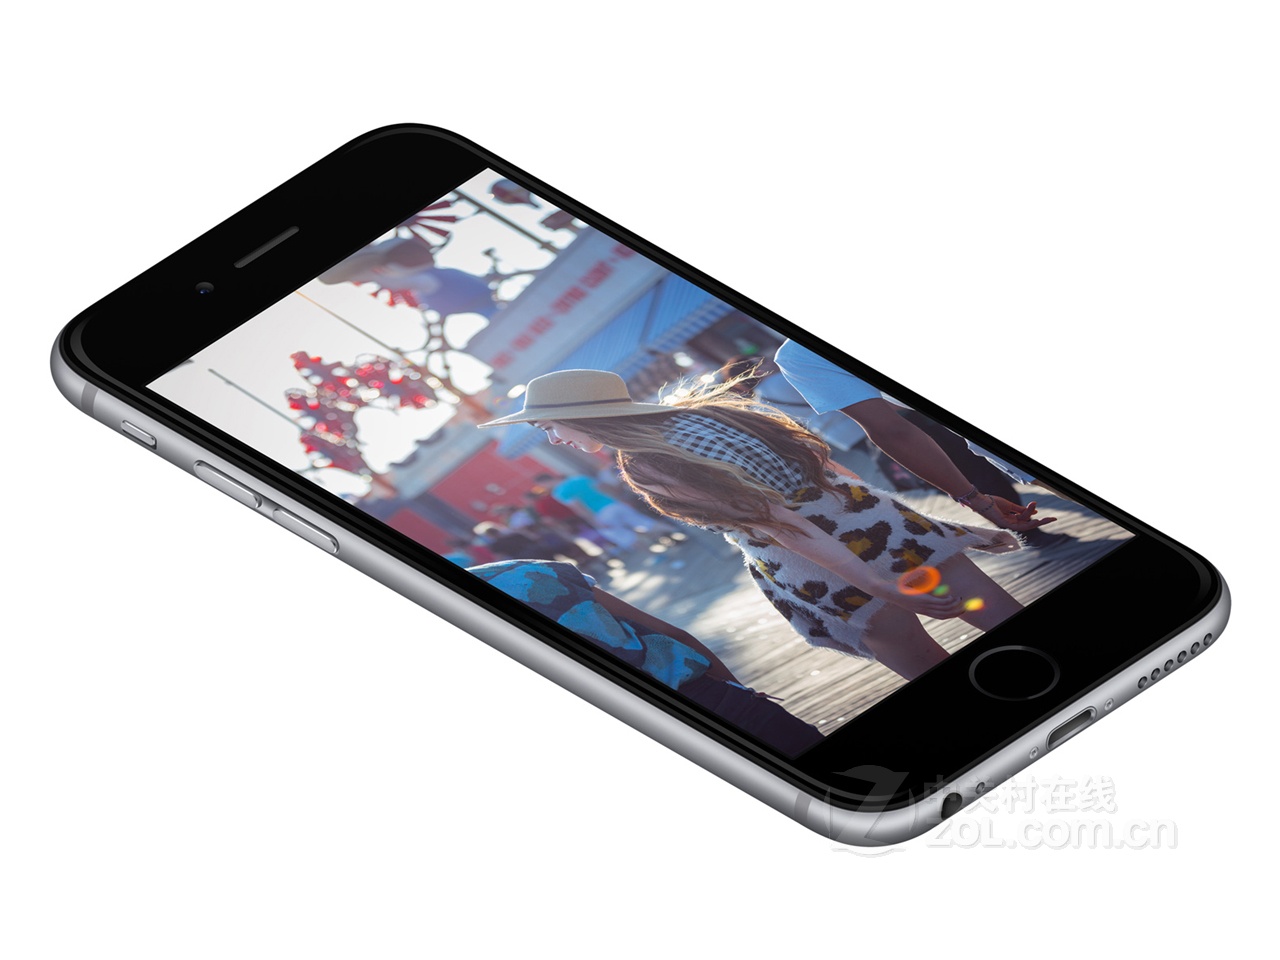 Iphone 6s customized (64 gb) factory to unlock, grey